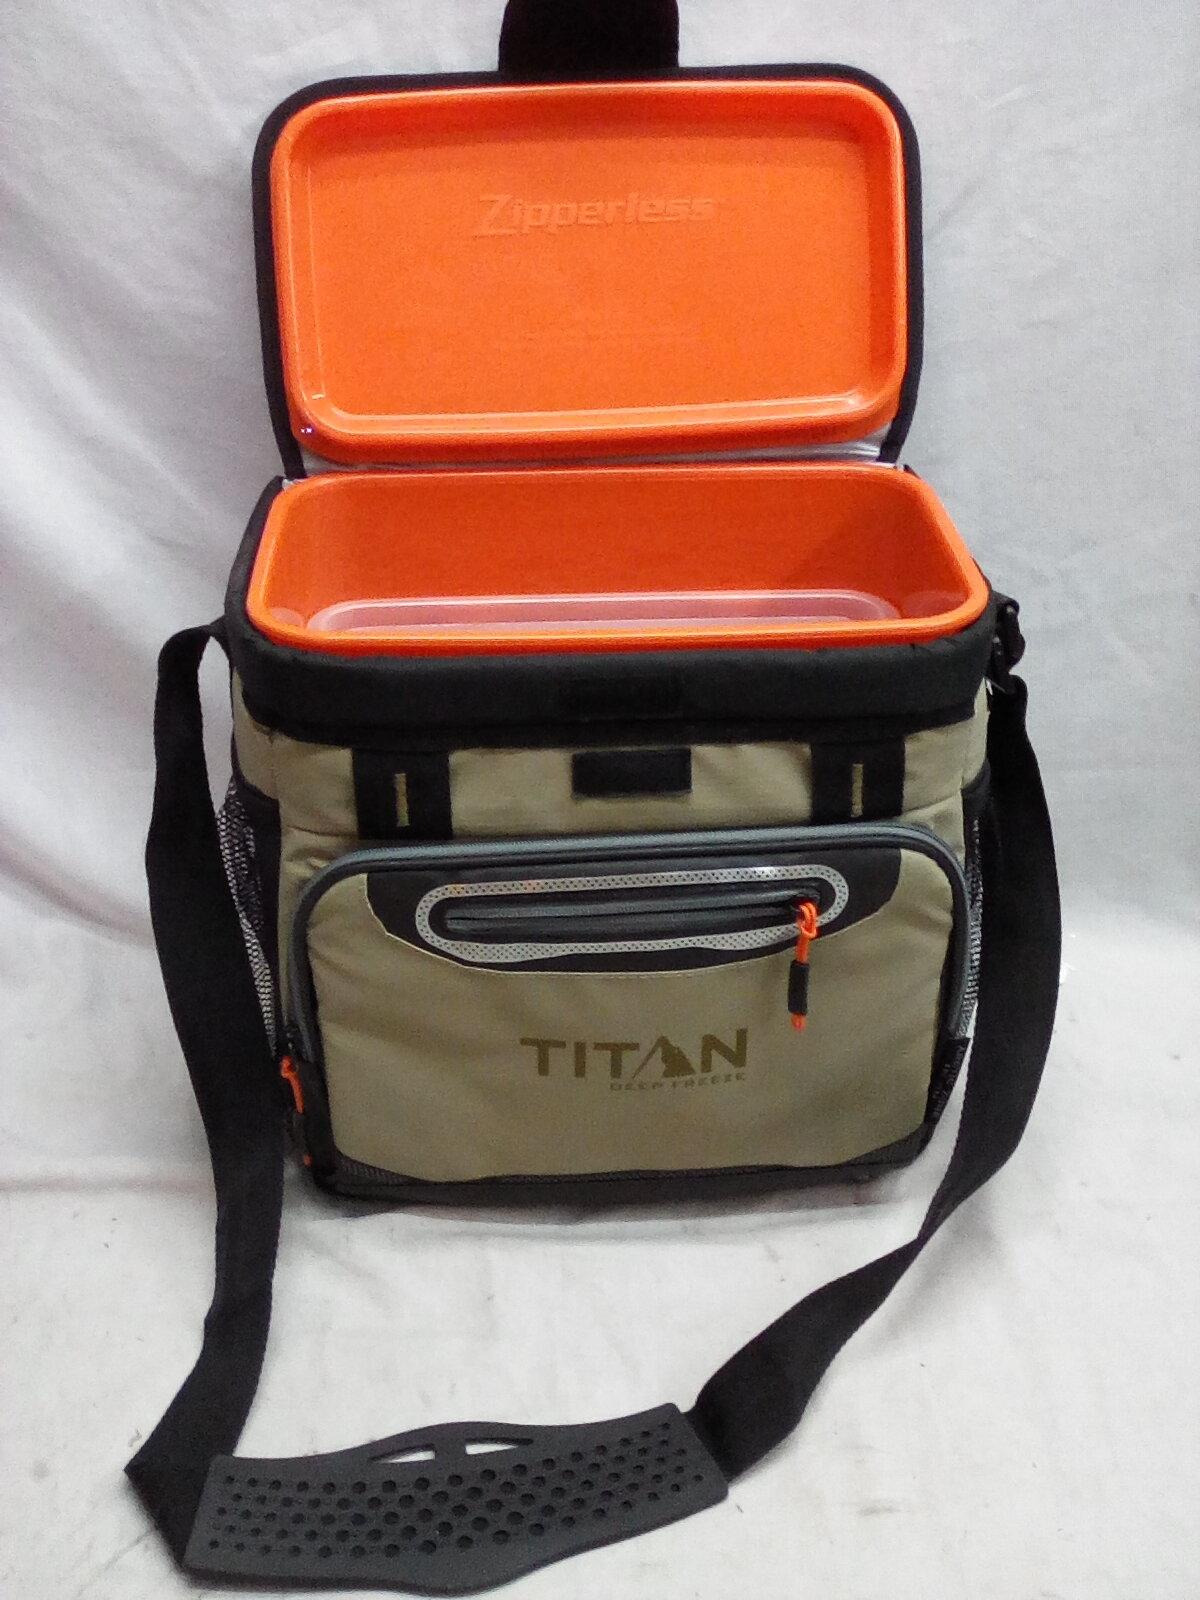 Titan Zipperless Coldlok Deep Freeze Travel Cooler Bag/ Lunch Bag